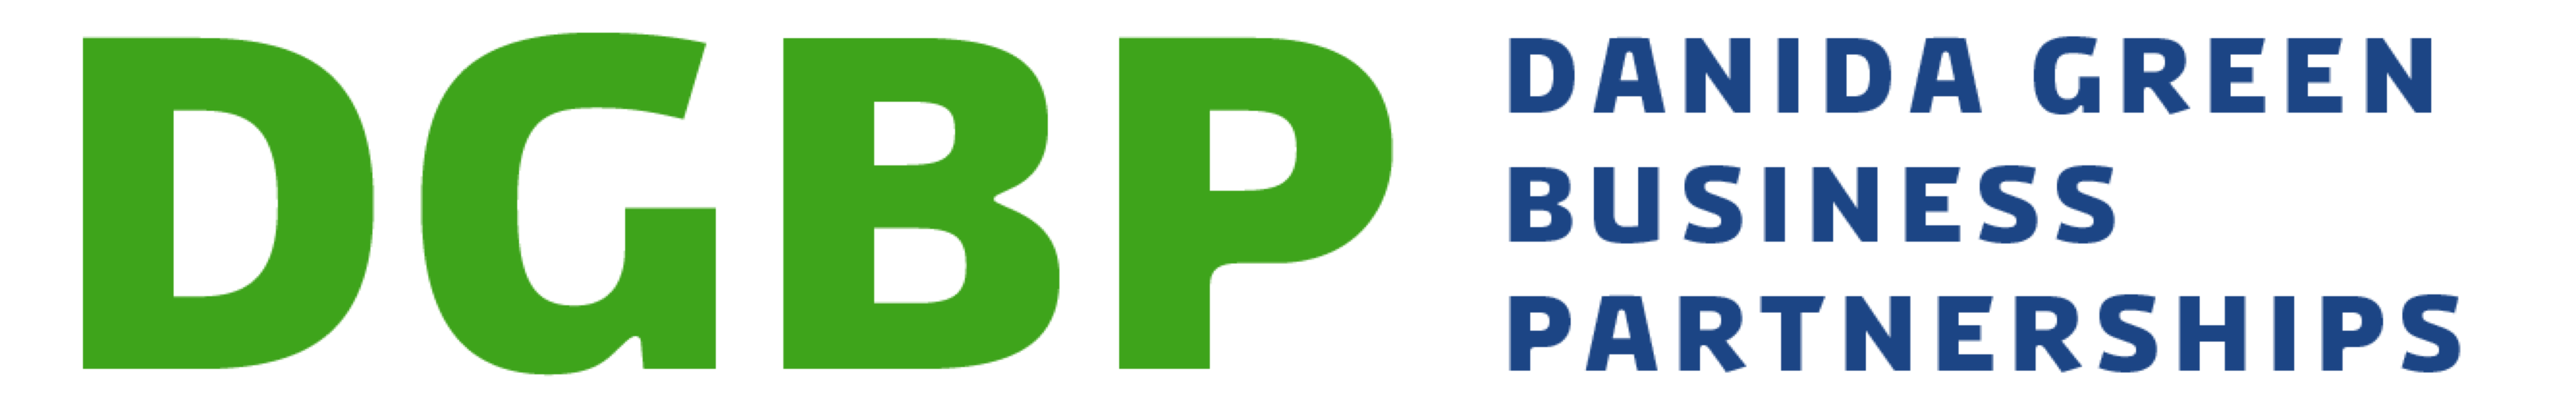 DGBP Danida Green Business Partnership Logo